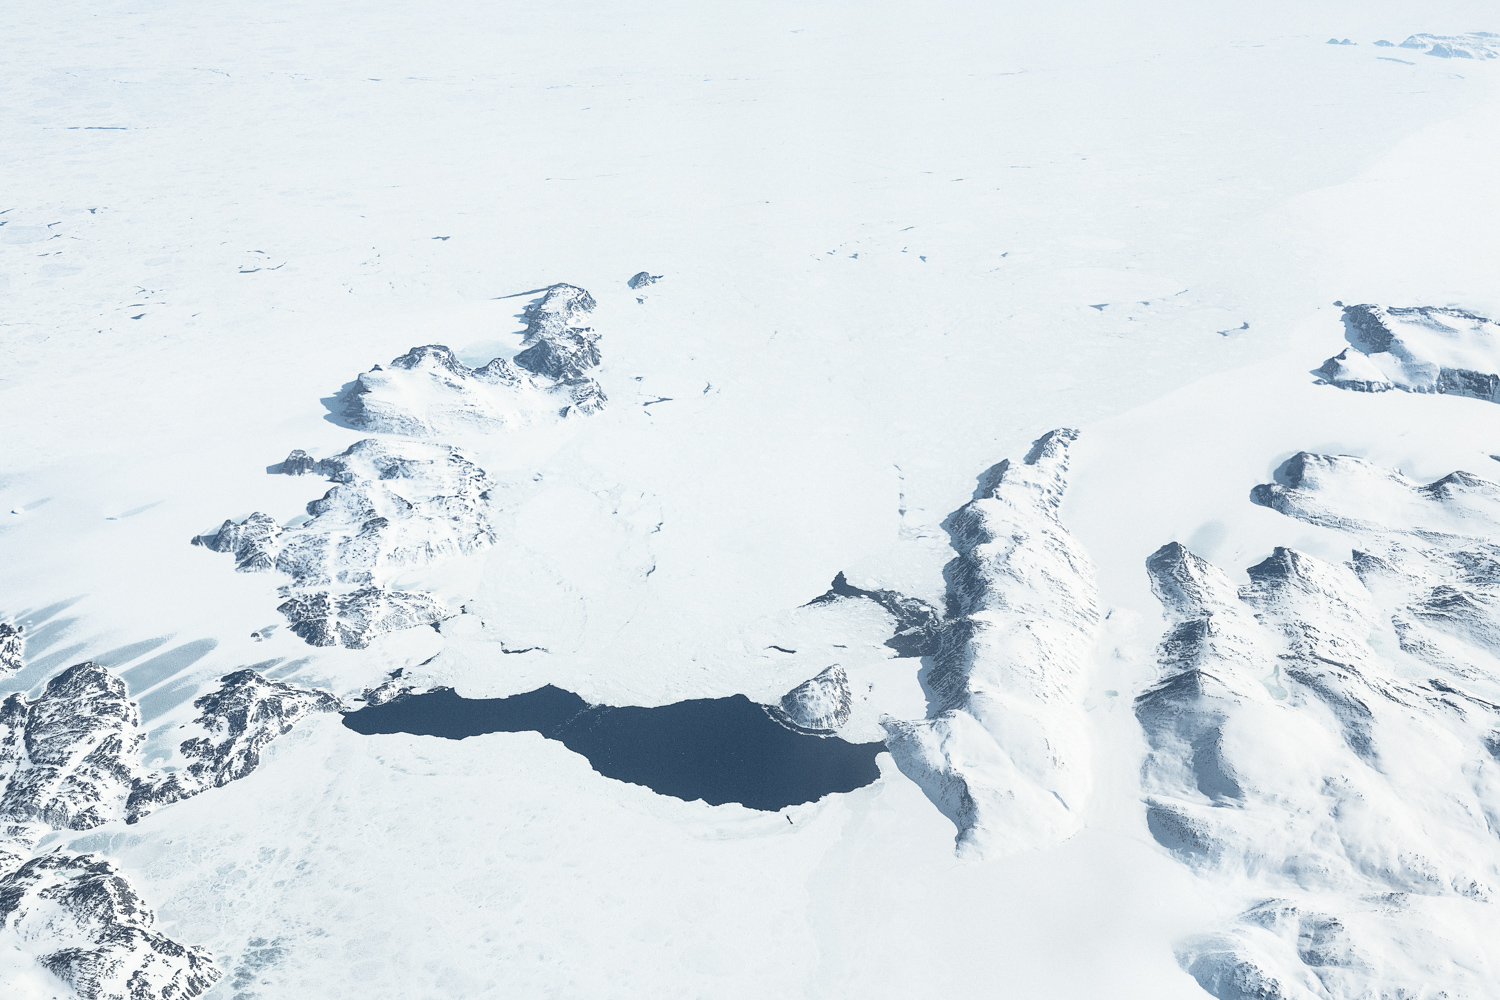  Greenland I, 2013 //  80 cm x 120 cm  